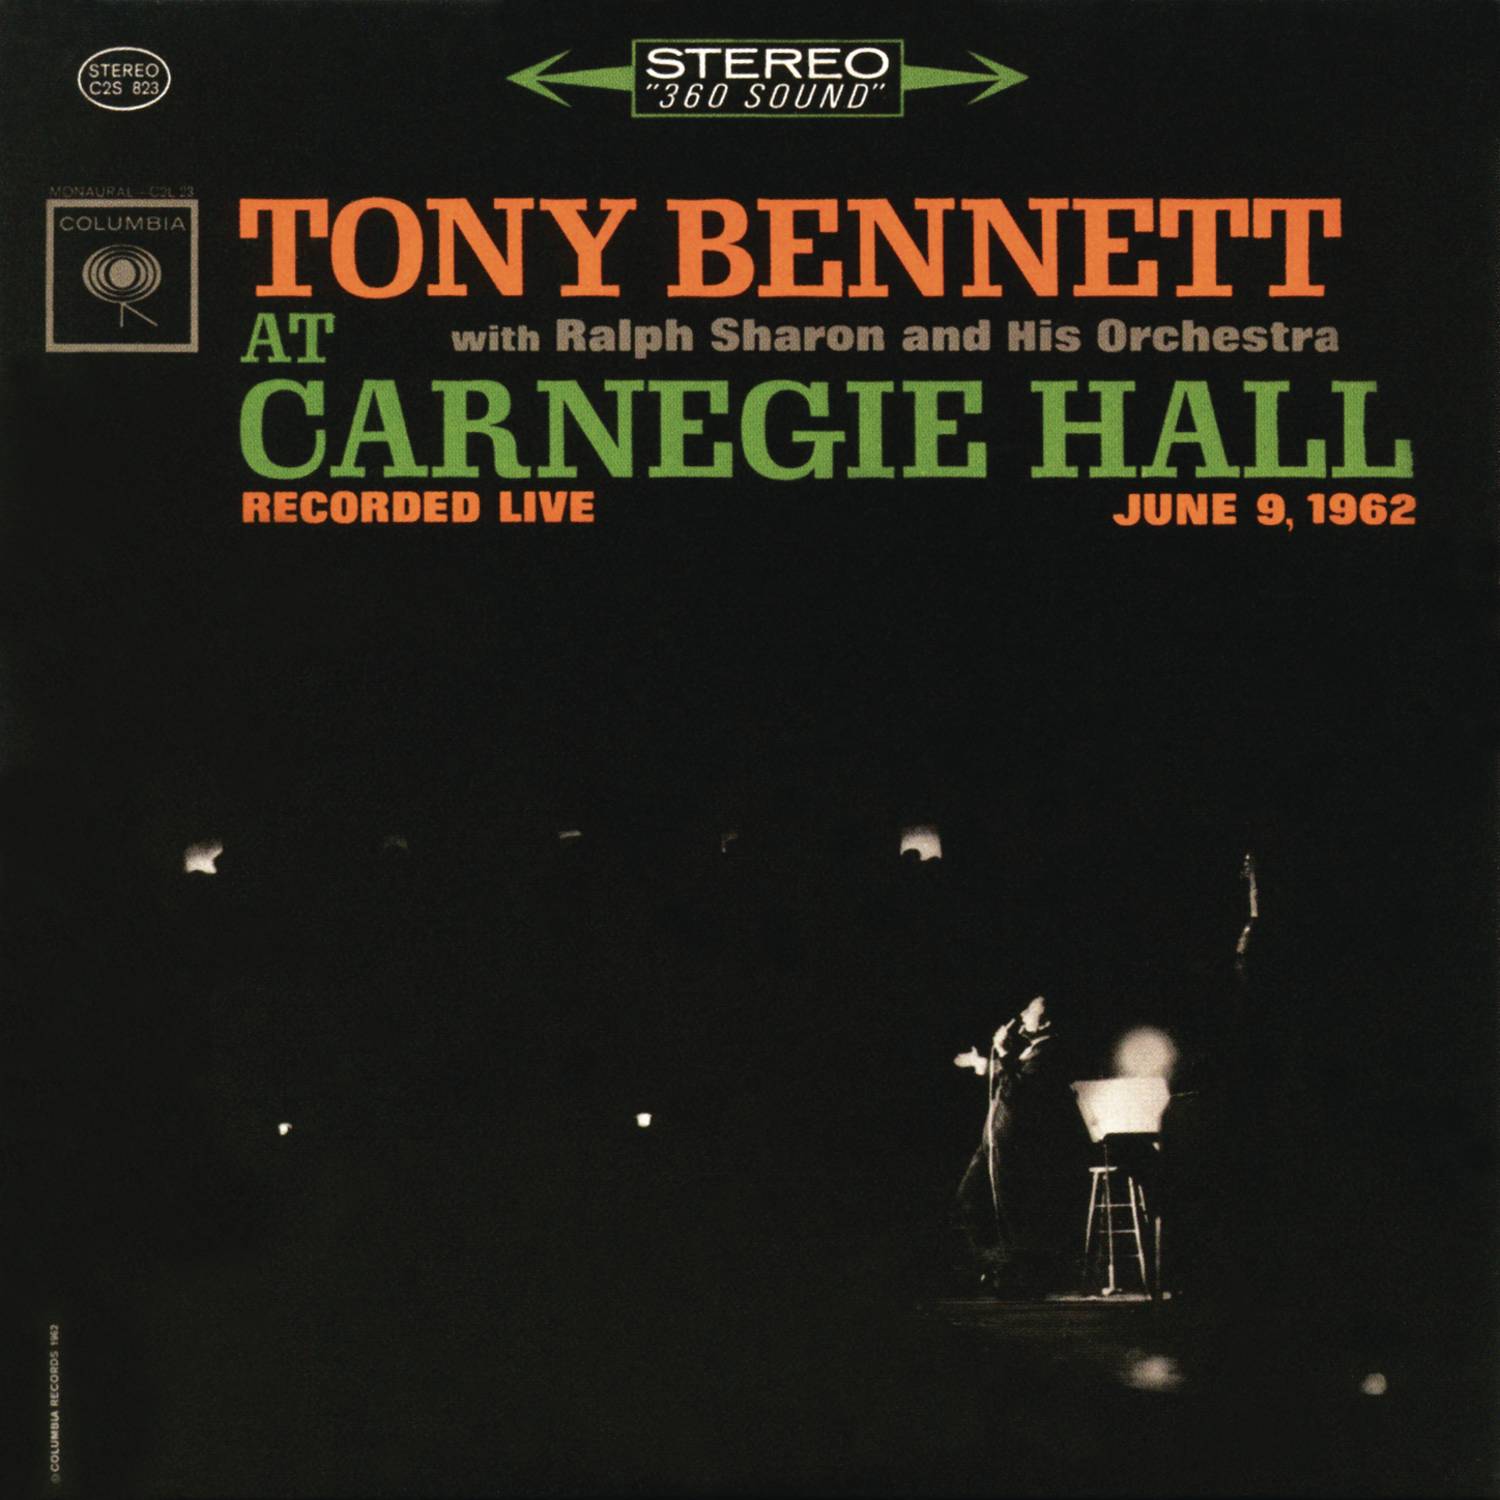 Tony Bennett – At Carnegie Hall: The Complete Concert (1962/2016) [AcousticSounds FLAC 24bit/96kHz]